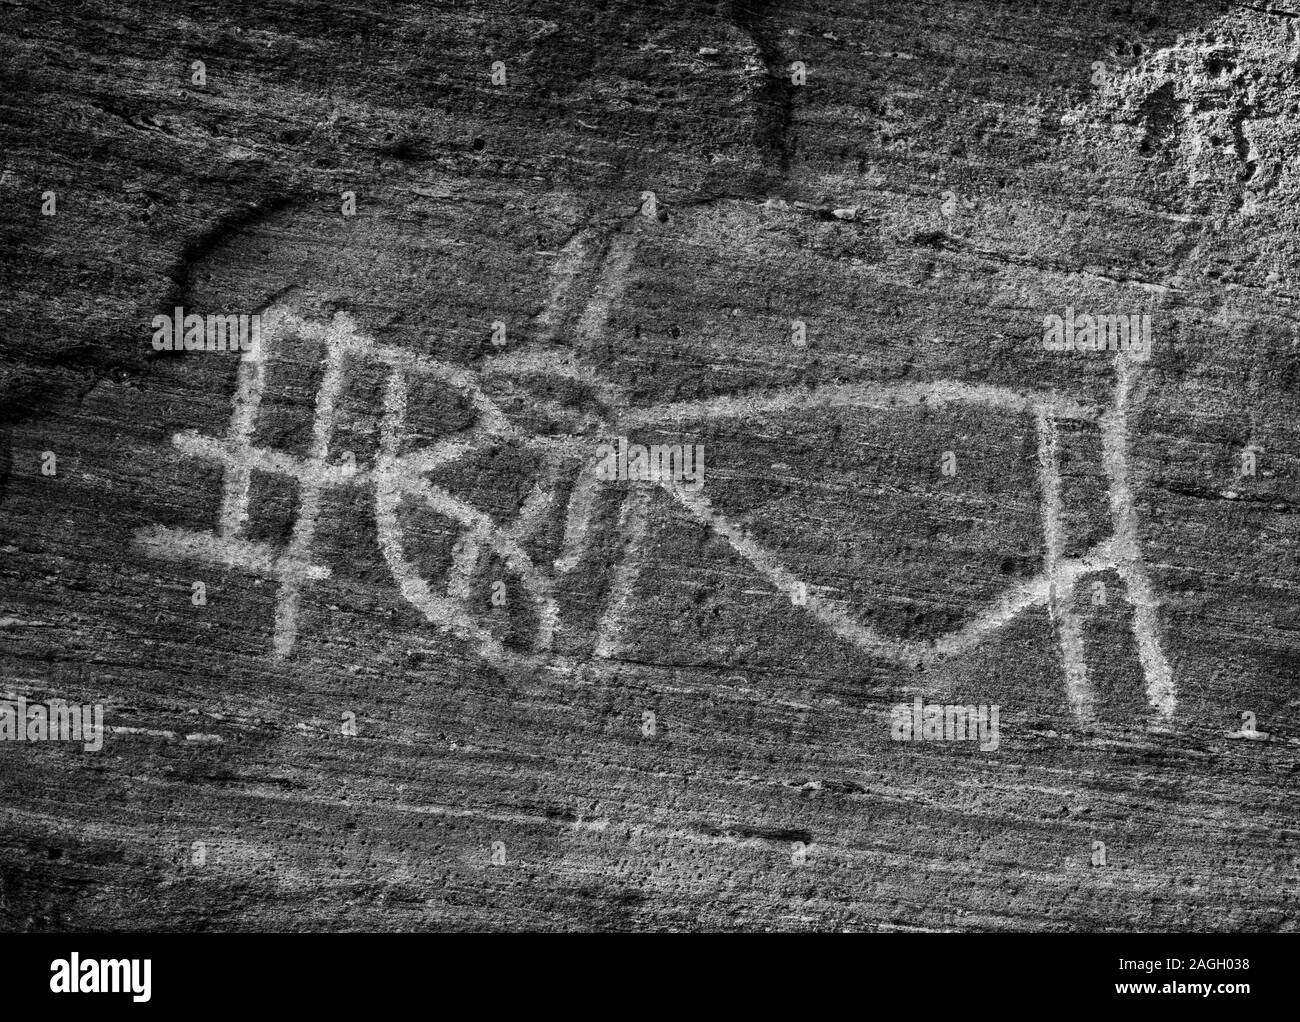 SKAVBERGET, KVALØYA ISALND, Troms County, Norvegia - Prehistoric incisioni rupestri, Helleristninger, Norvegia settentrionale. Foto Stock